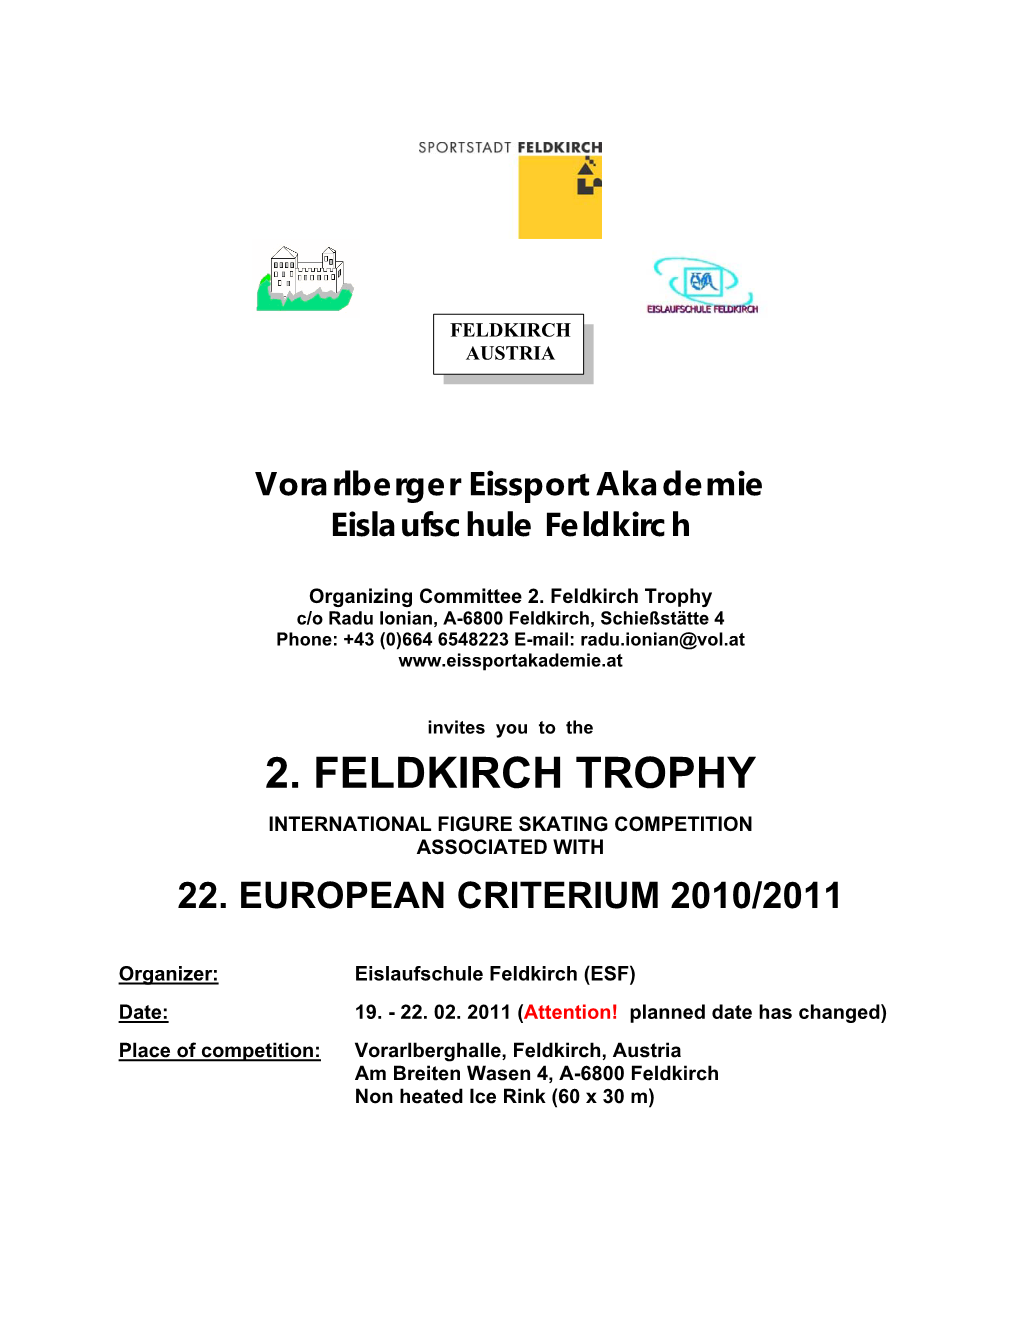 2. Feldkirch Trophy C/O Radu Ionian, A-6800 Feldkirch, Schießstätte 4 Phone: +43 (0)664 6548223 E-Mail: Radu.Ionian@Vol.At